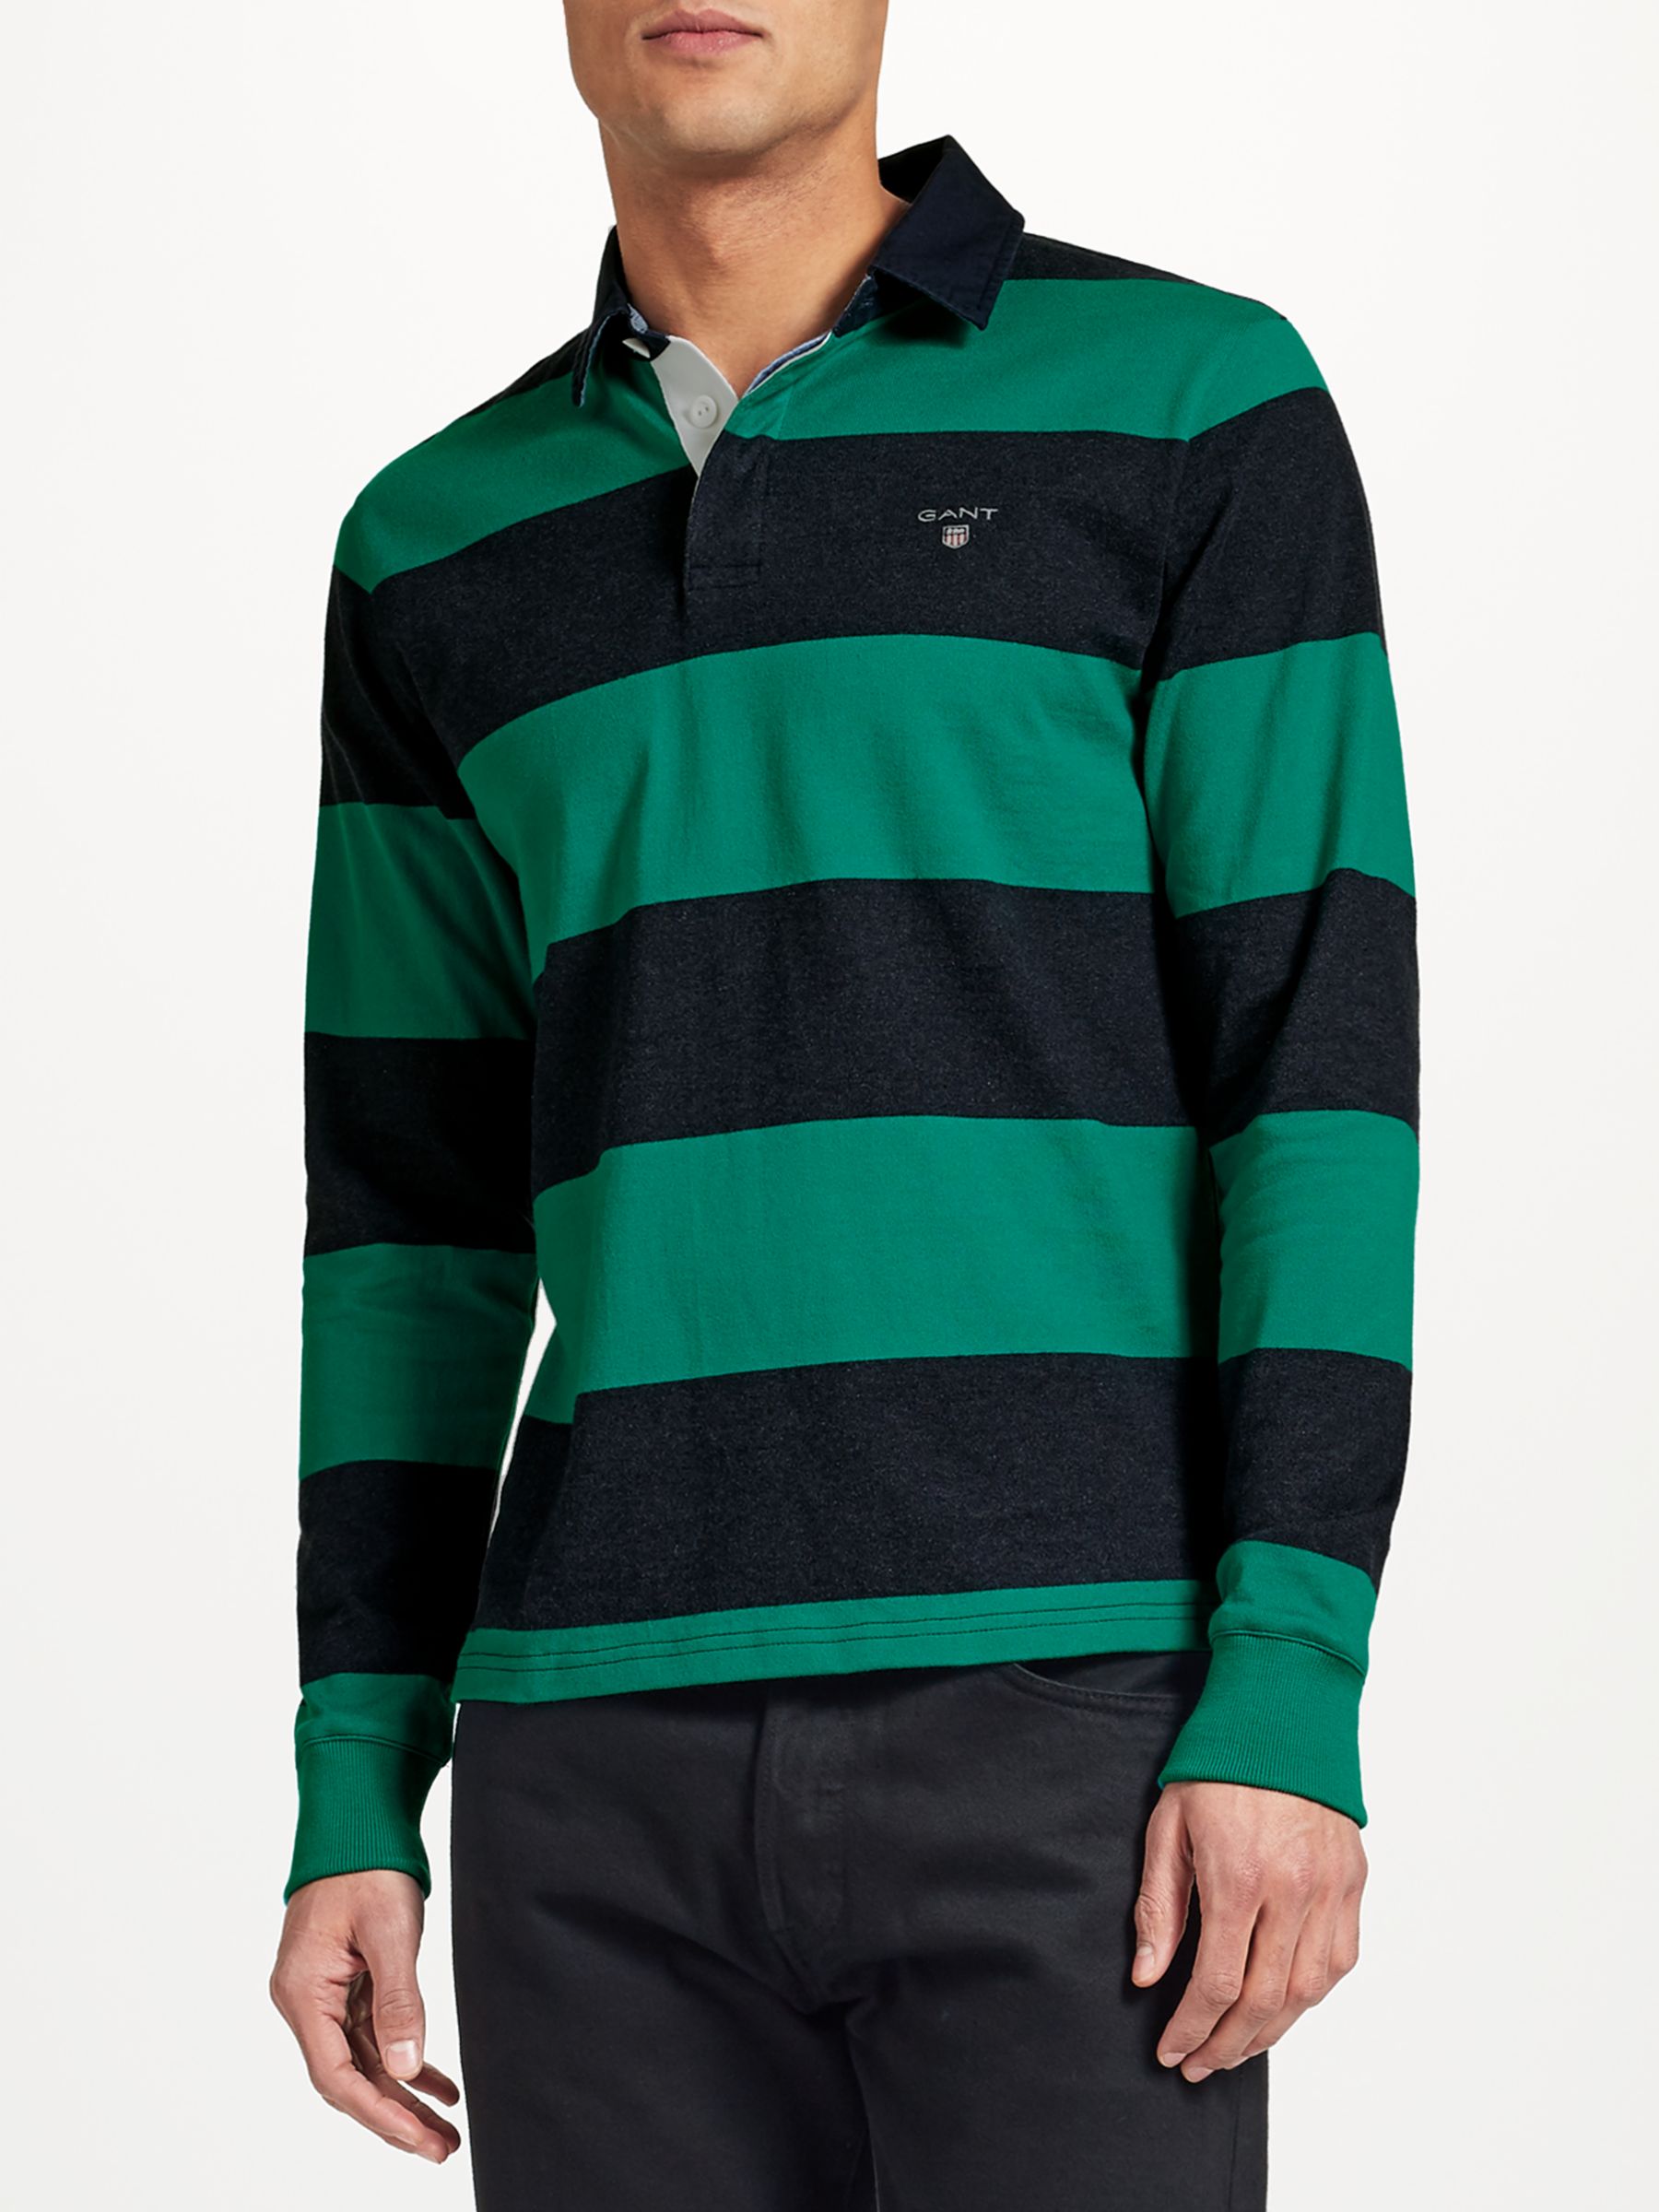 GANT Rugger Bar Stripe Heavy Jersey Rugby Shirt, Emerald Green, XL